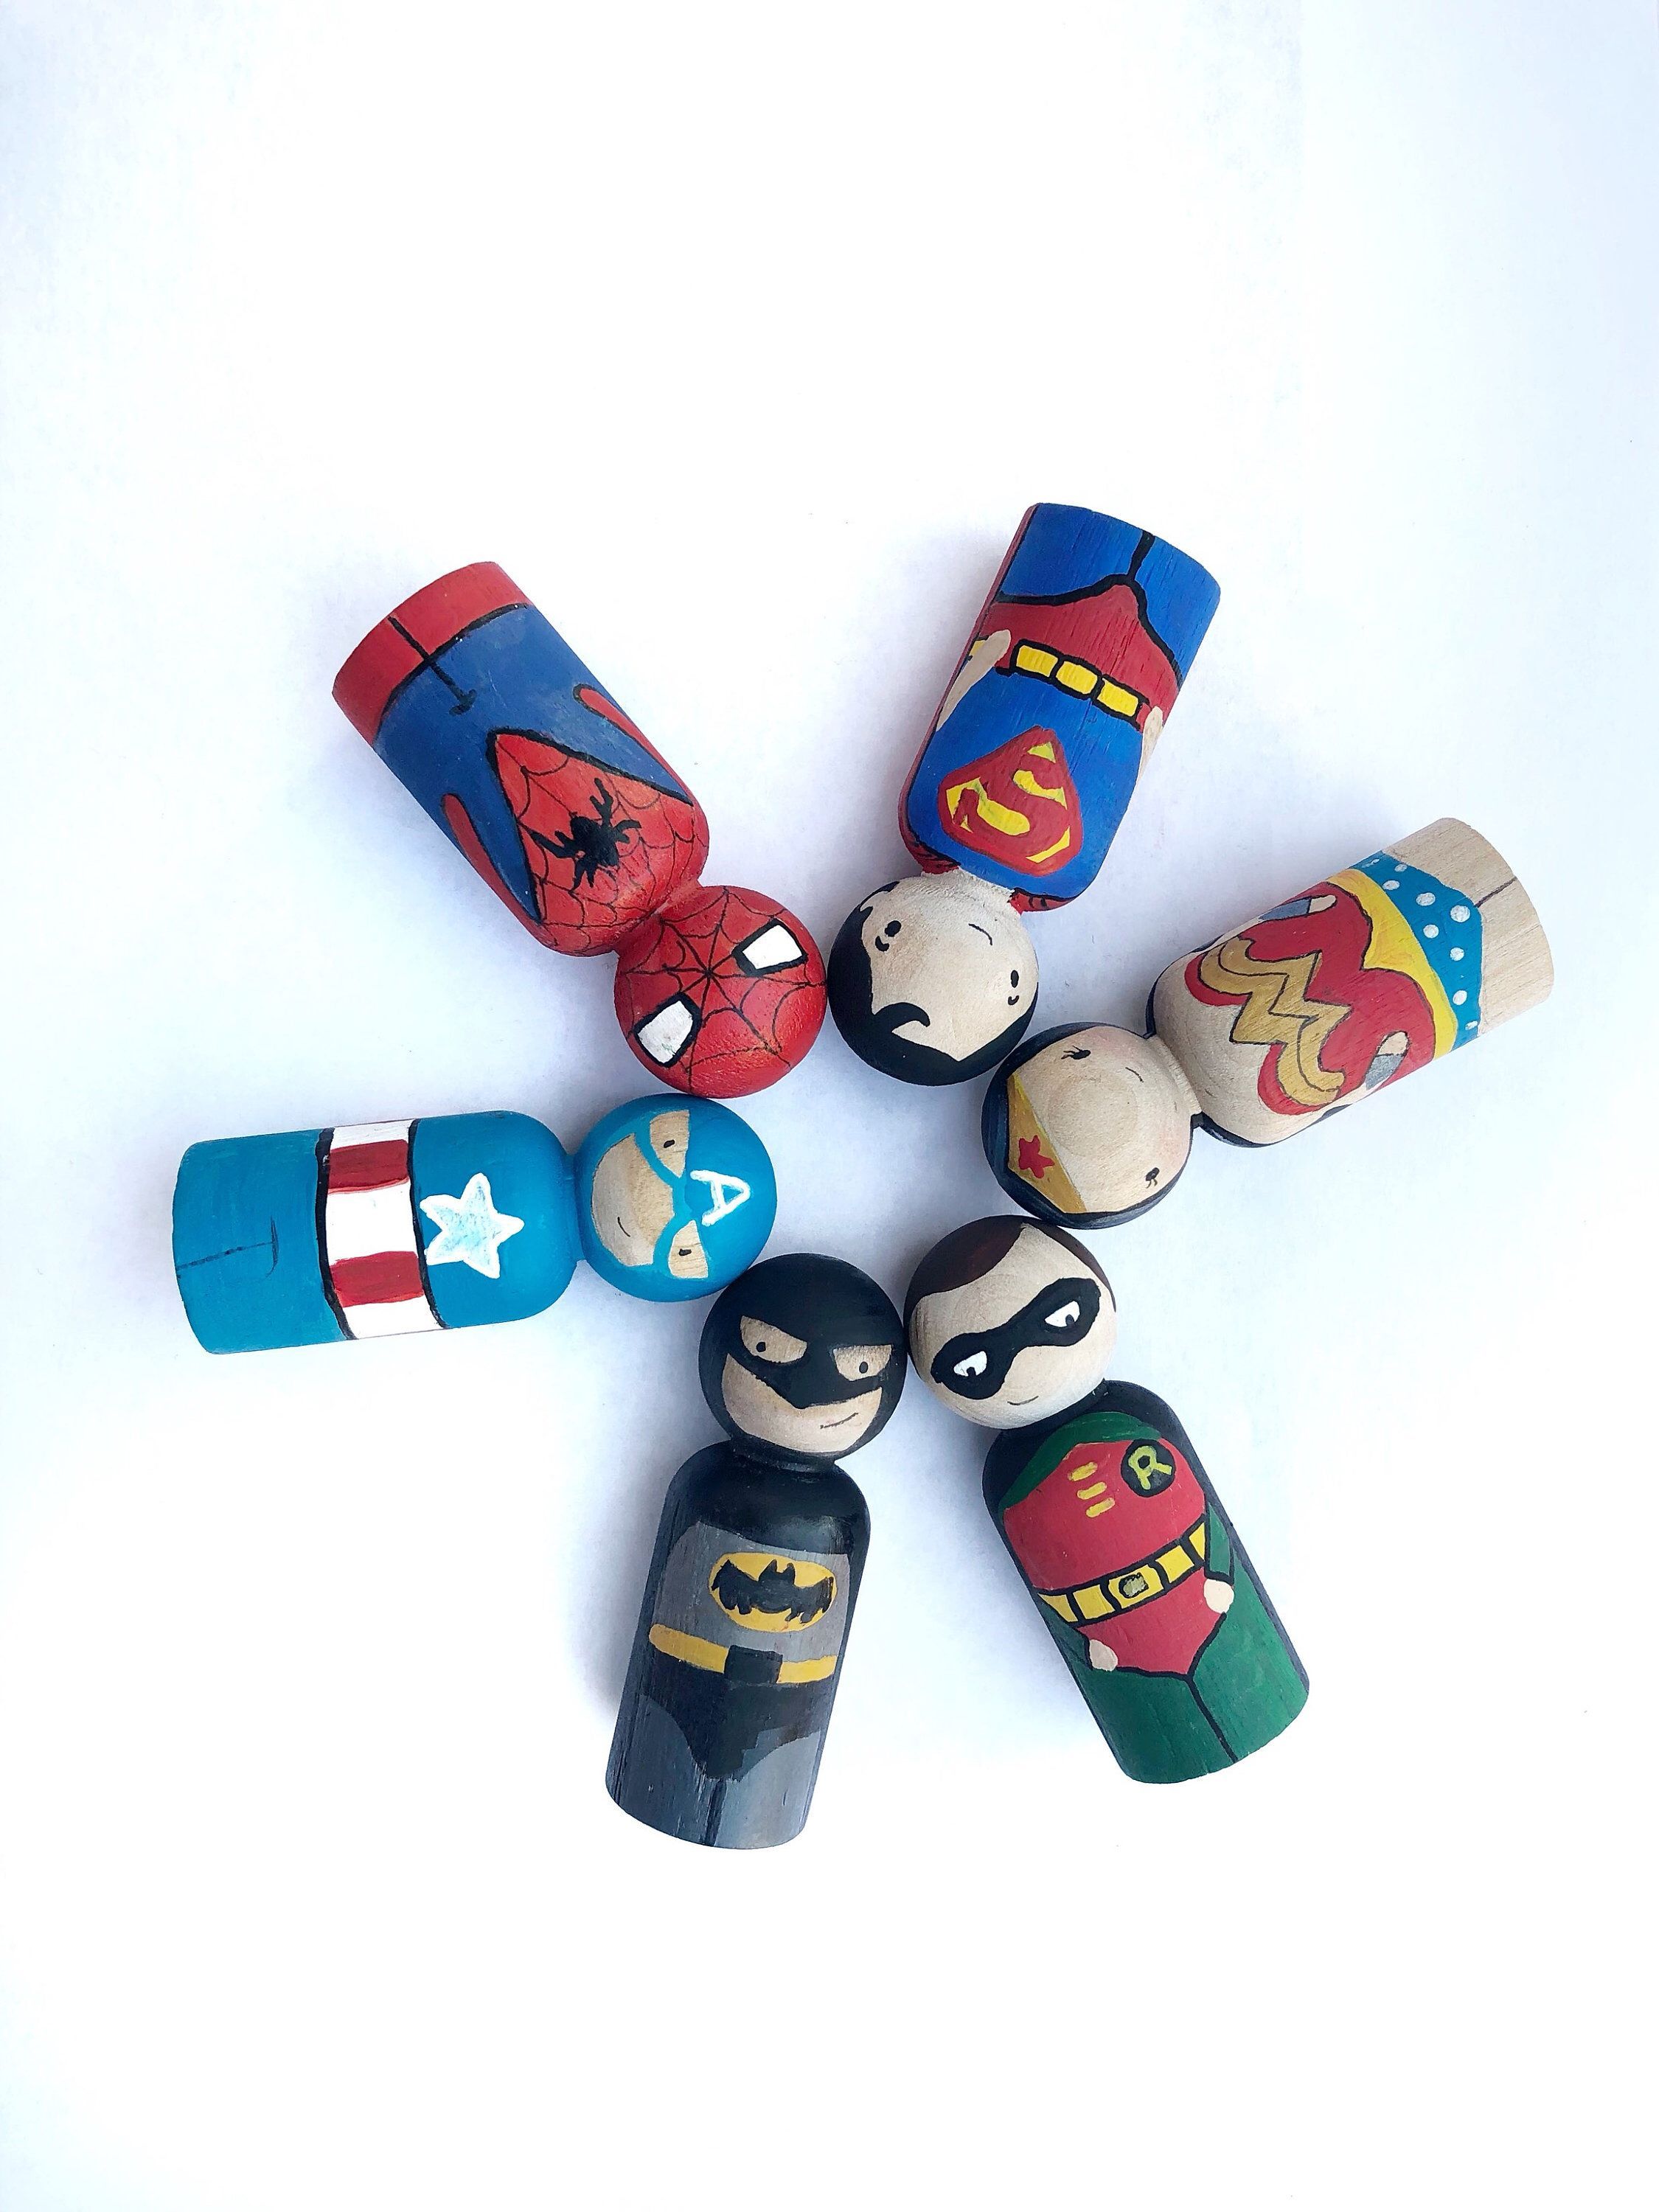 Superhero Peg doll set / Gift for Boys / Christmas Gift / Wooden Toy / Batman / Captain America Busy Bag Toddler Super Hero Stocking stuffer -   18 fabric crafts For Boys christmas gifts ideas